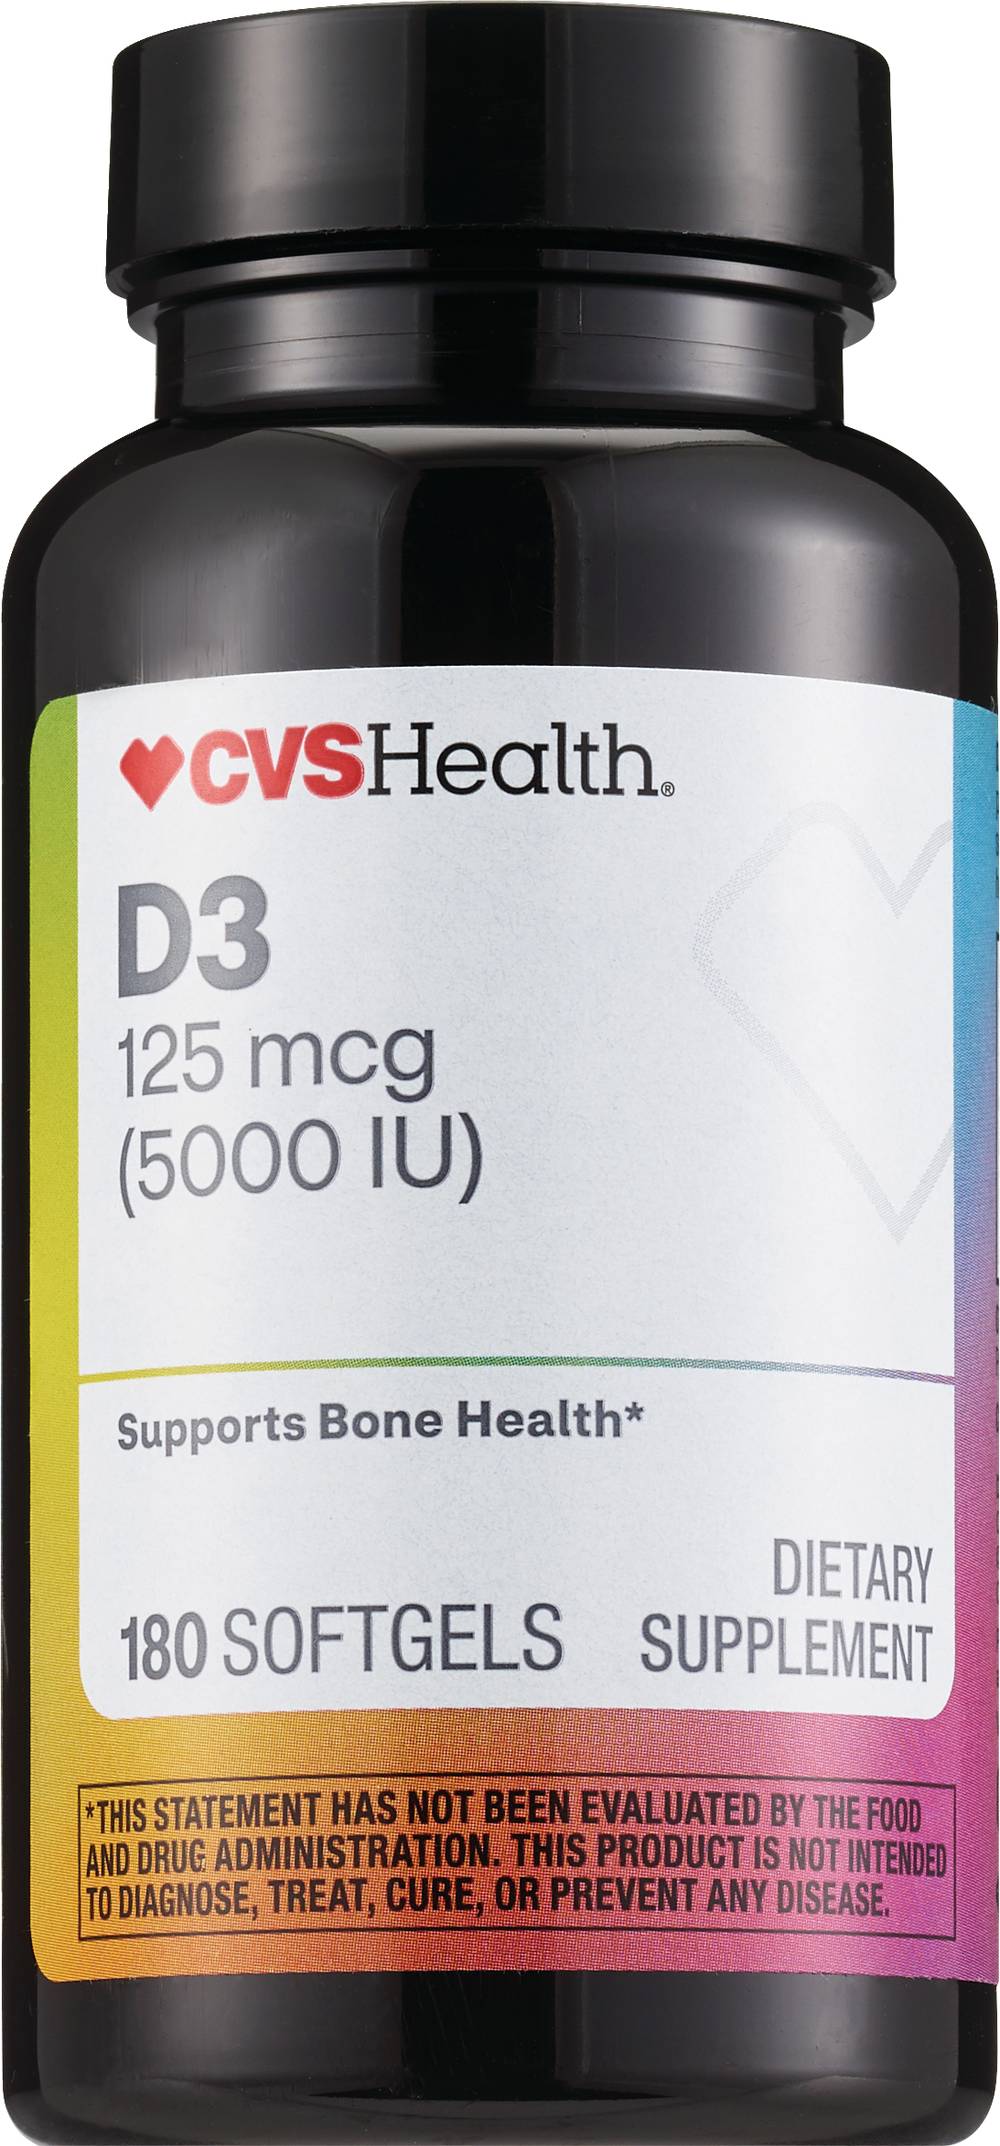 CVS Health D3 Bone Health Dietary Supplement Softgels, 180 CT